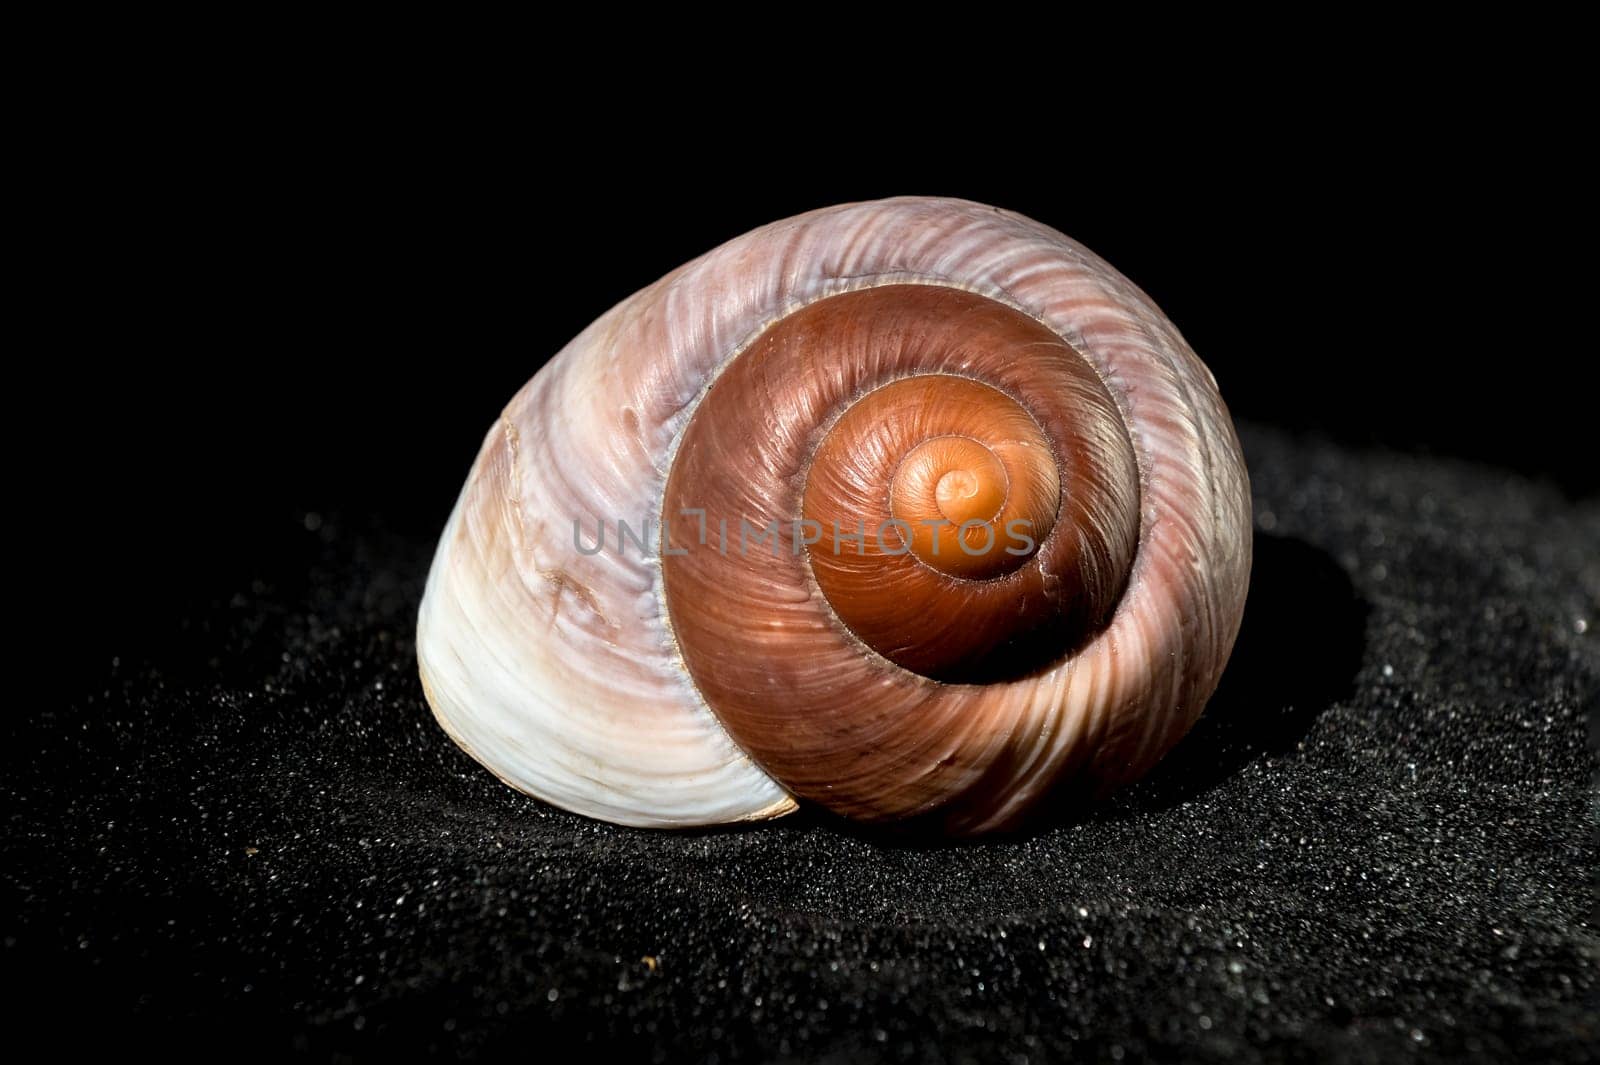 Ryssota ovum Seashell on a black sand background by Multipedia